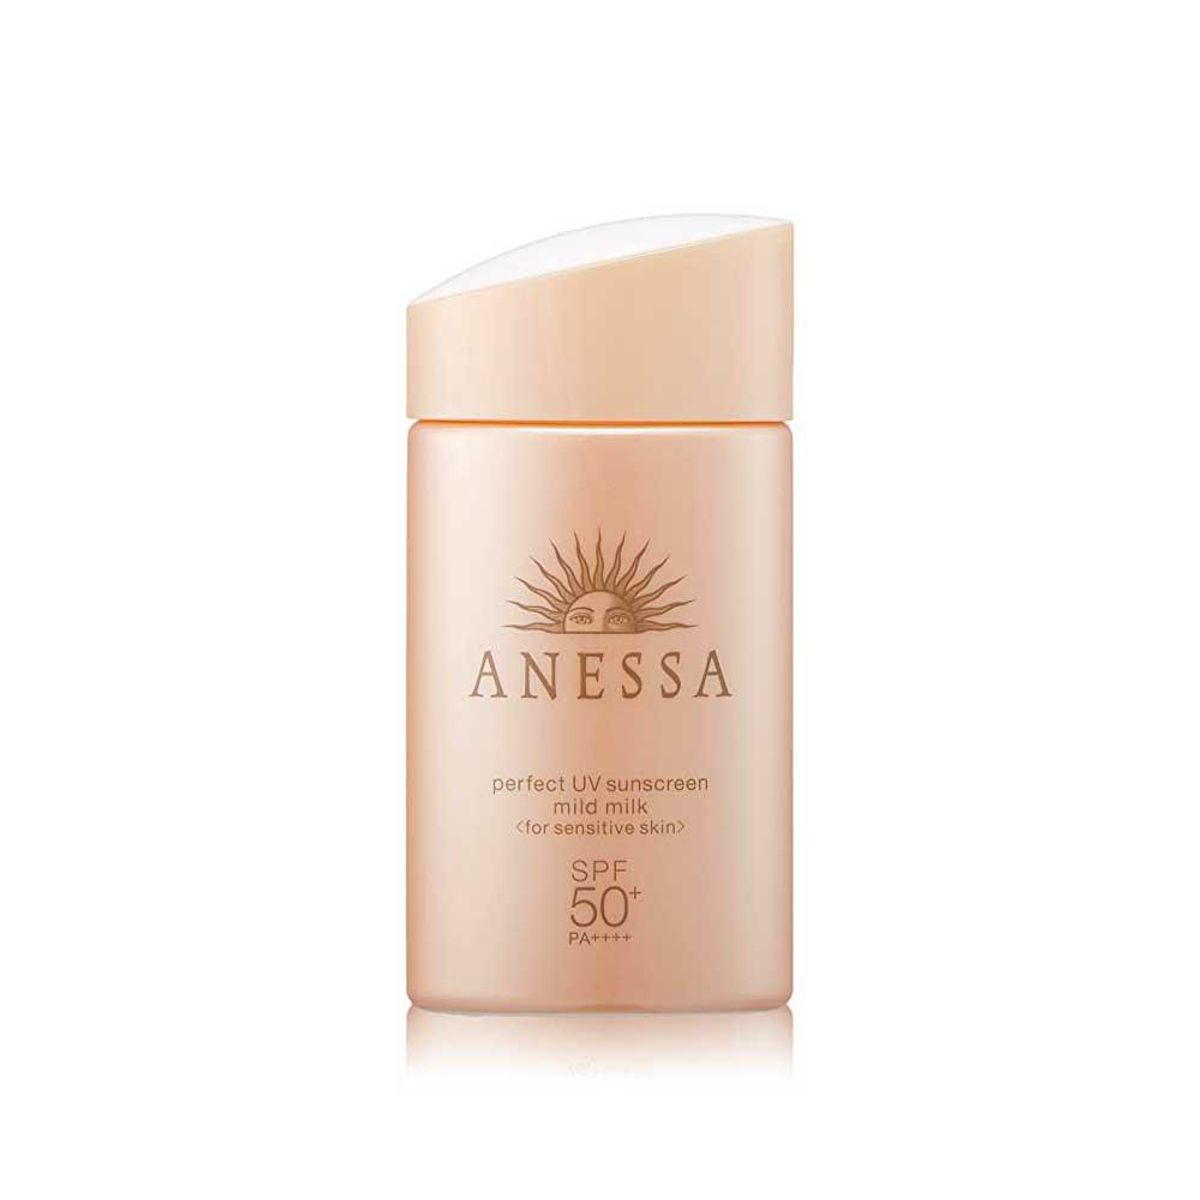 shiseido anessa perfect uv sunscreen mild milk a spf 50